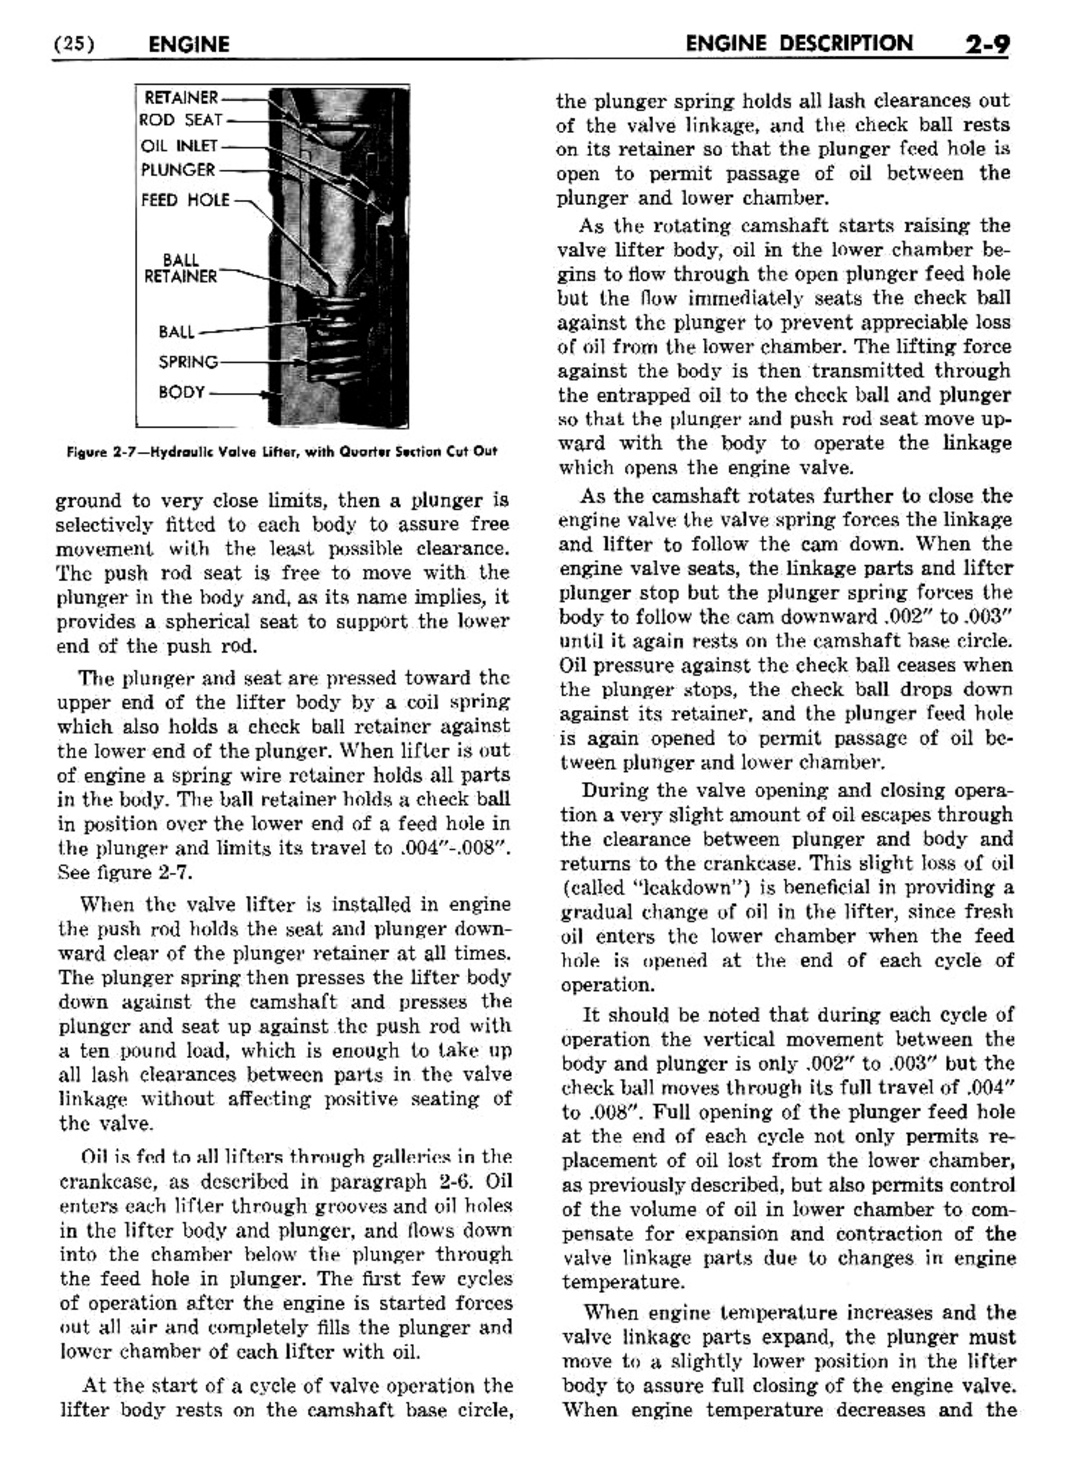 n_03 1954 Buick Shop Manual - Engine-009-009.jpg